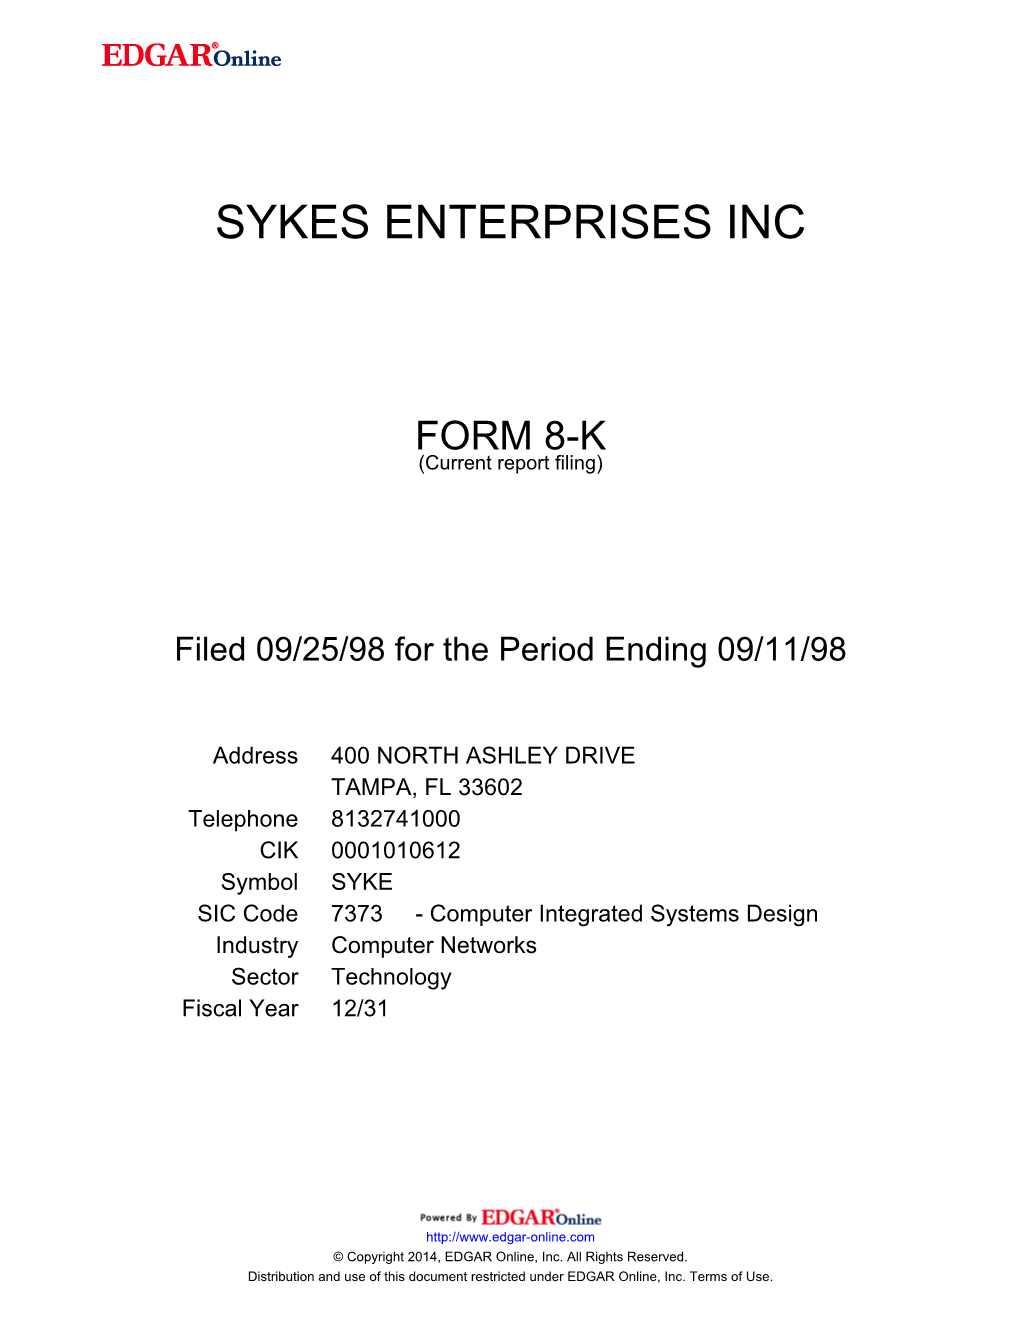 Sykes Enterprises Inc